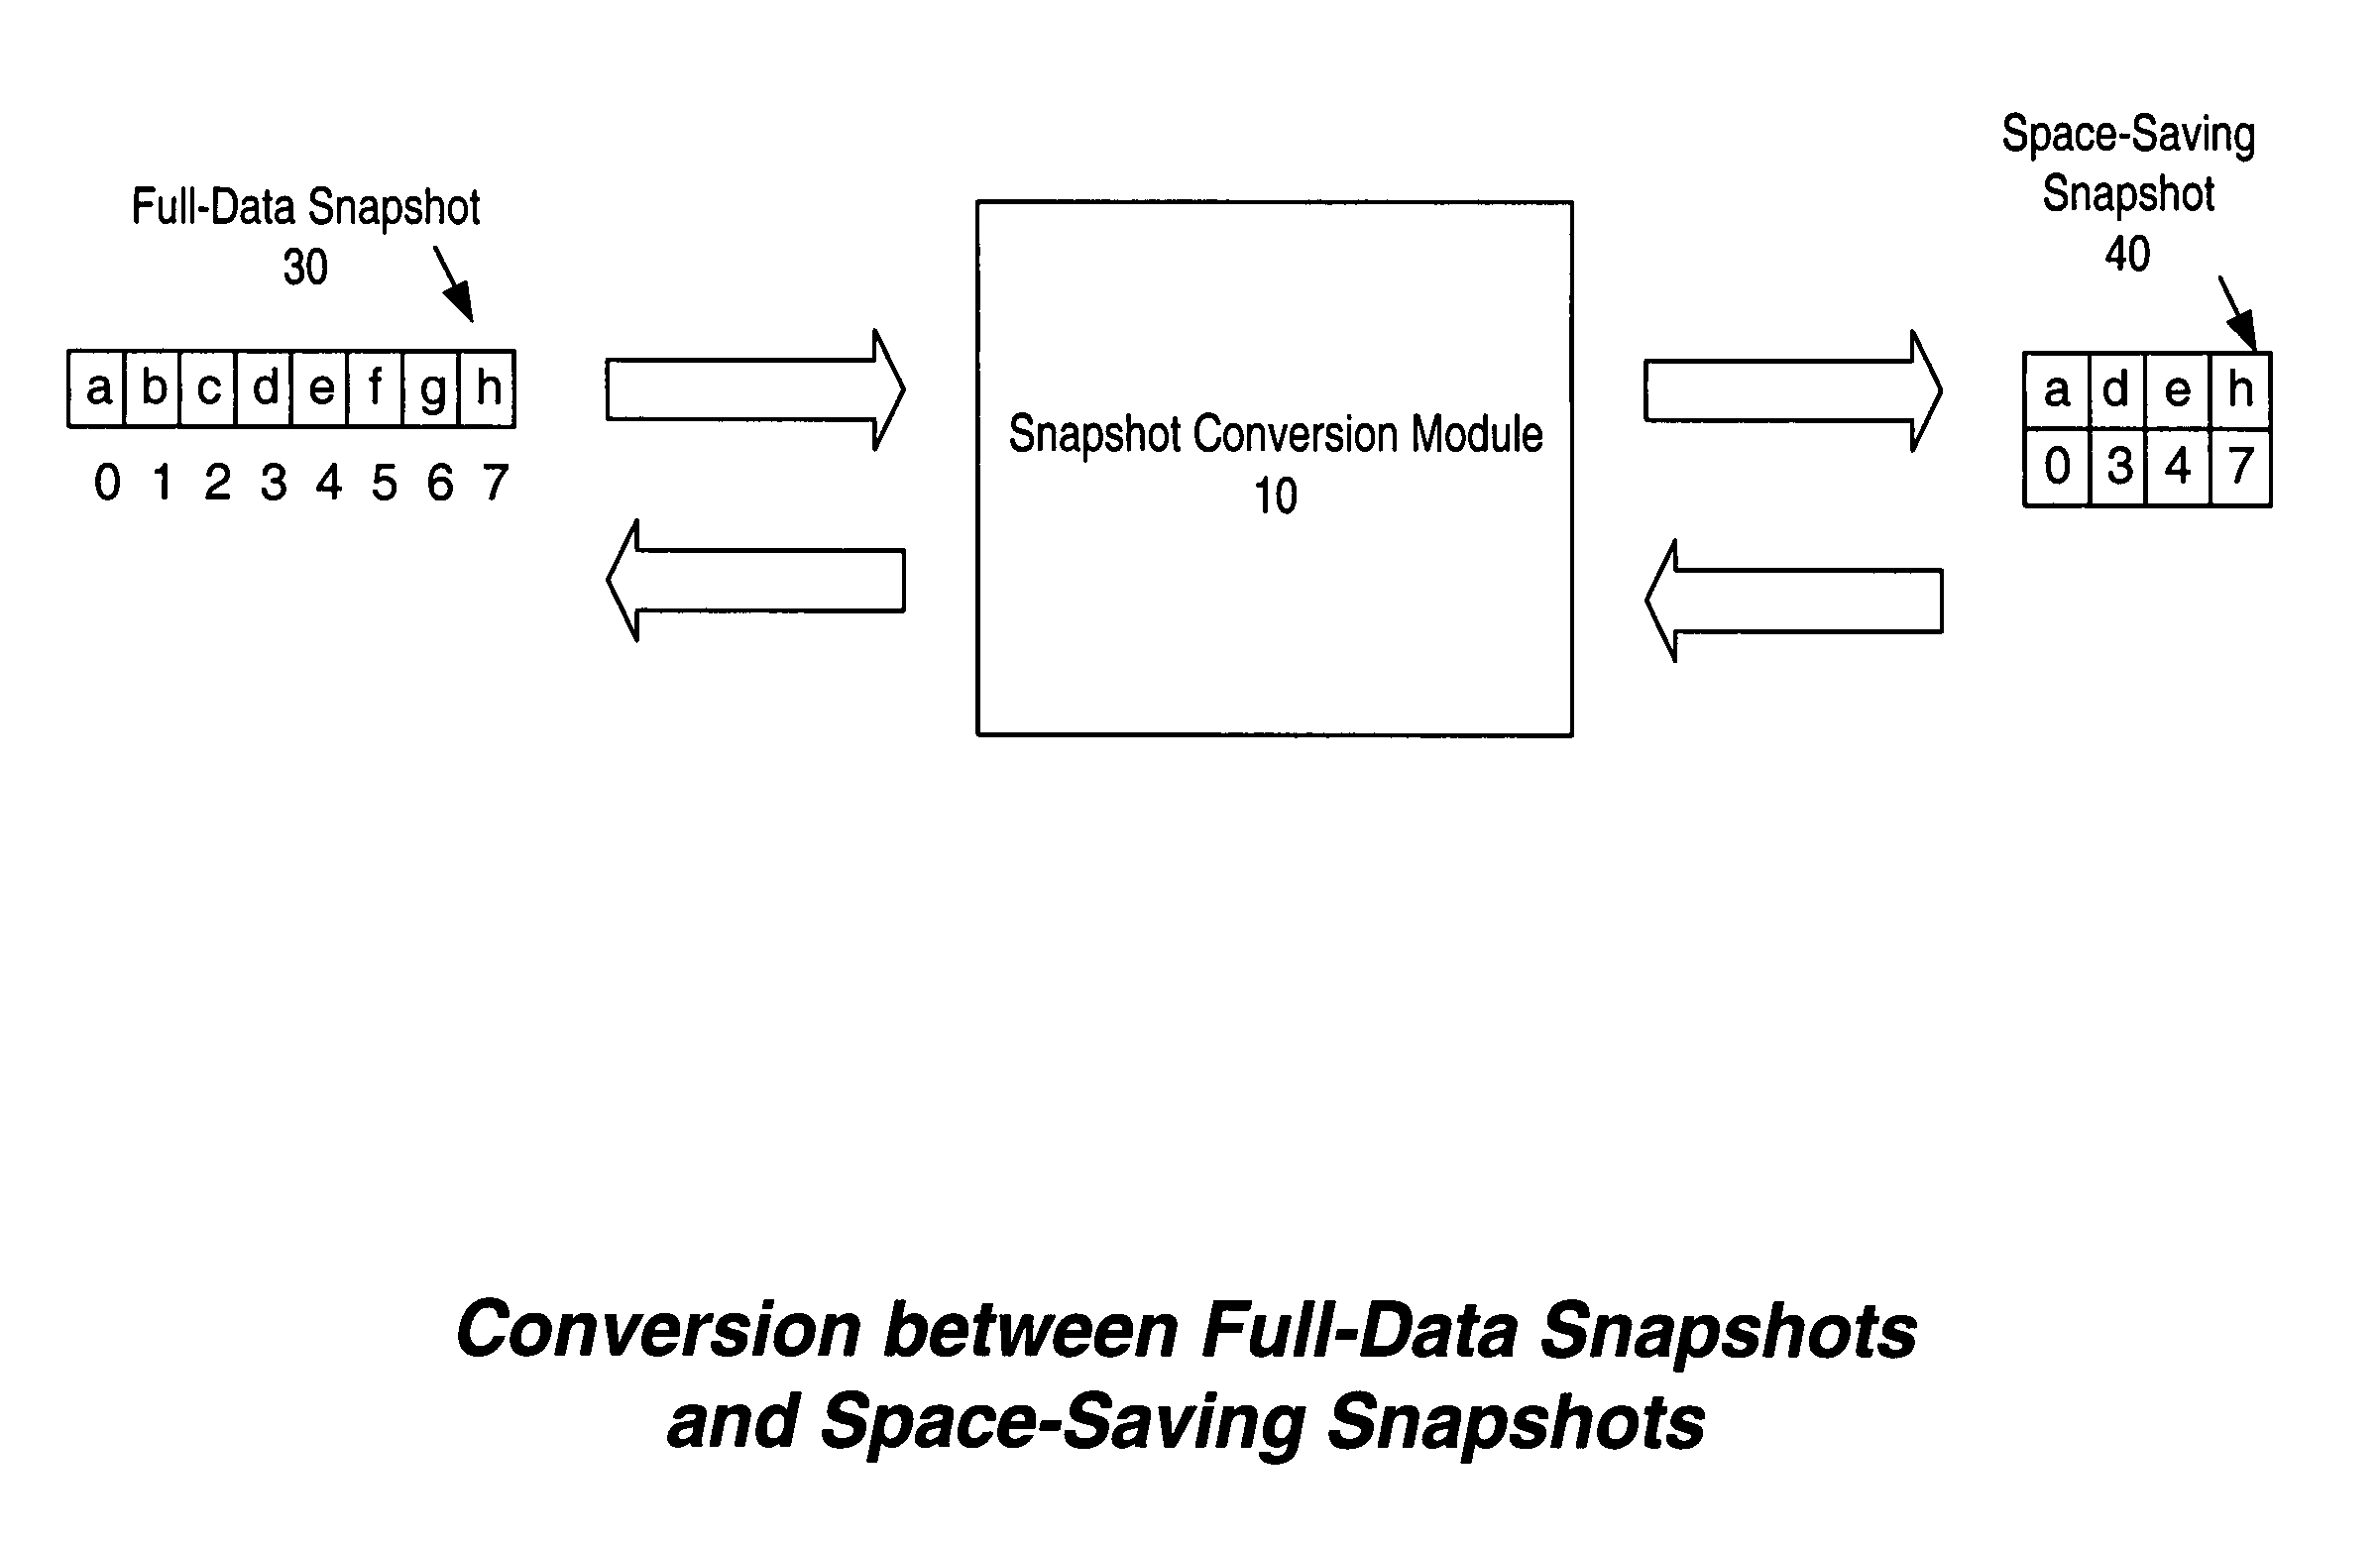 Conversion between full-data and space-saving snapshots